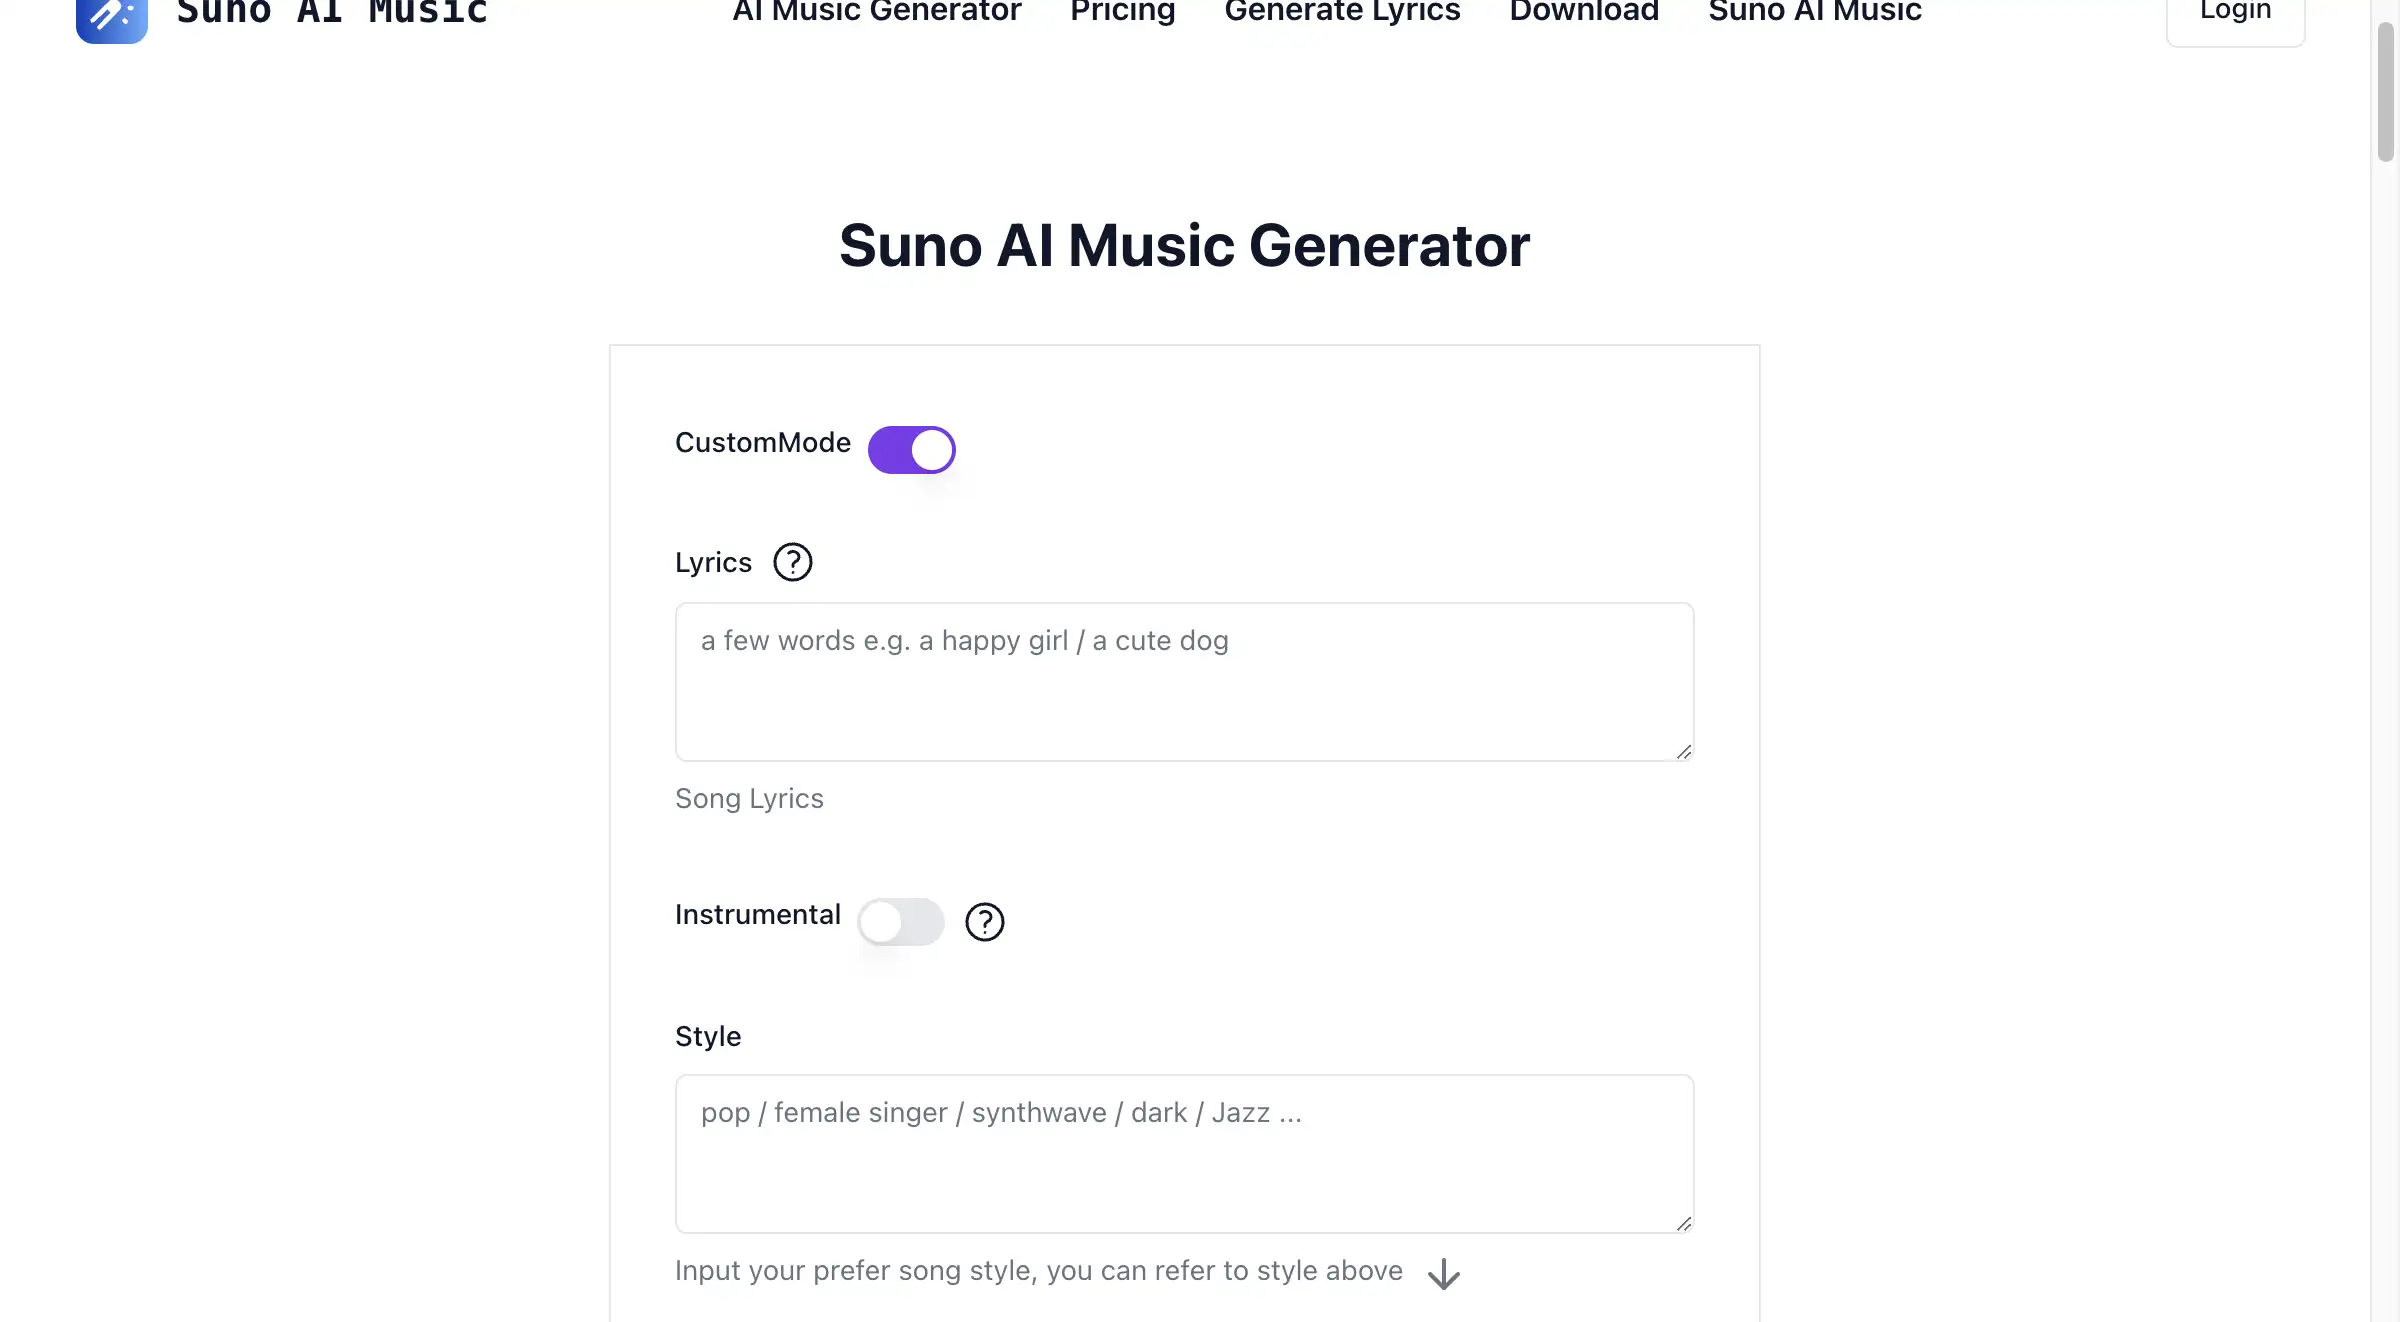 Suno AI Music